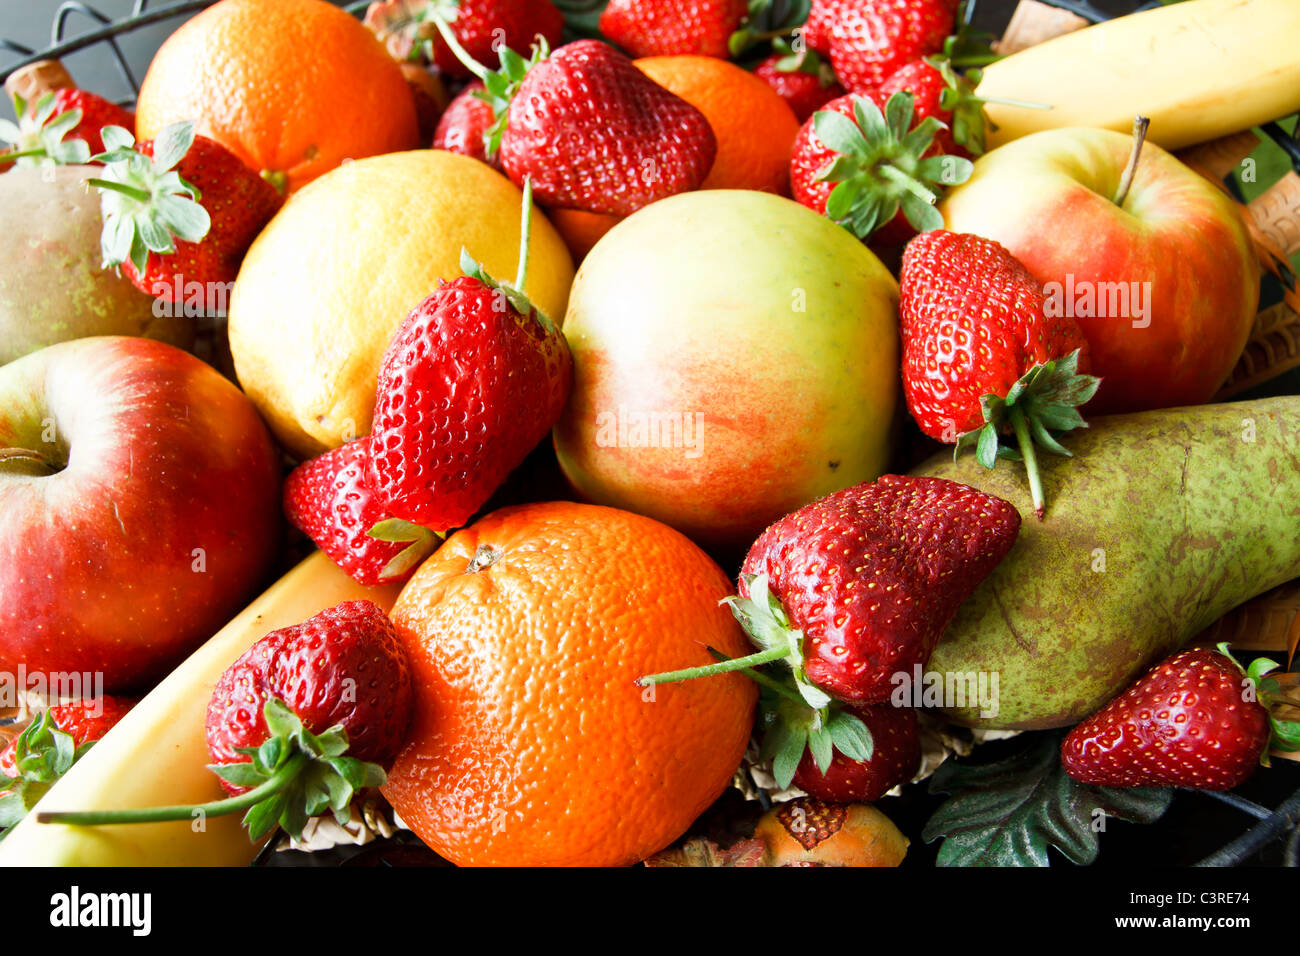 fruits close up strawberries, apples, lemons, oranges, bananas Stock Photo